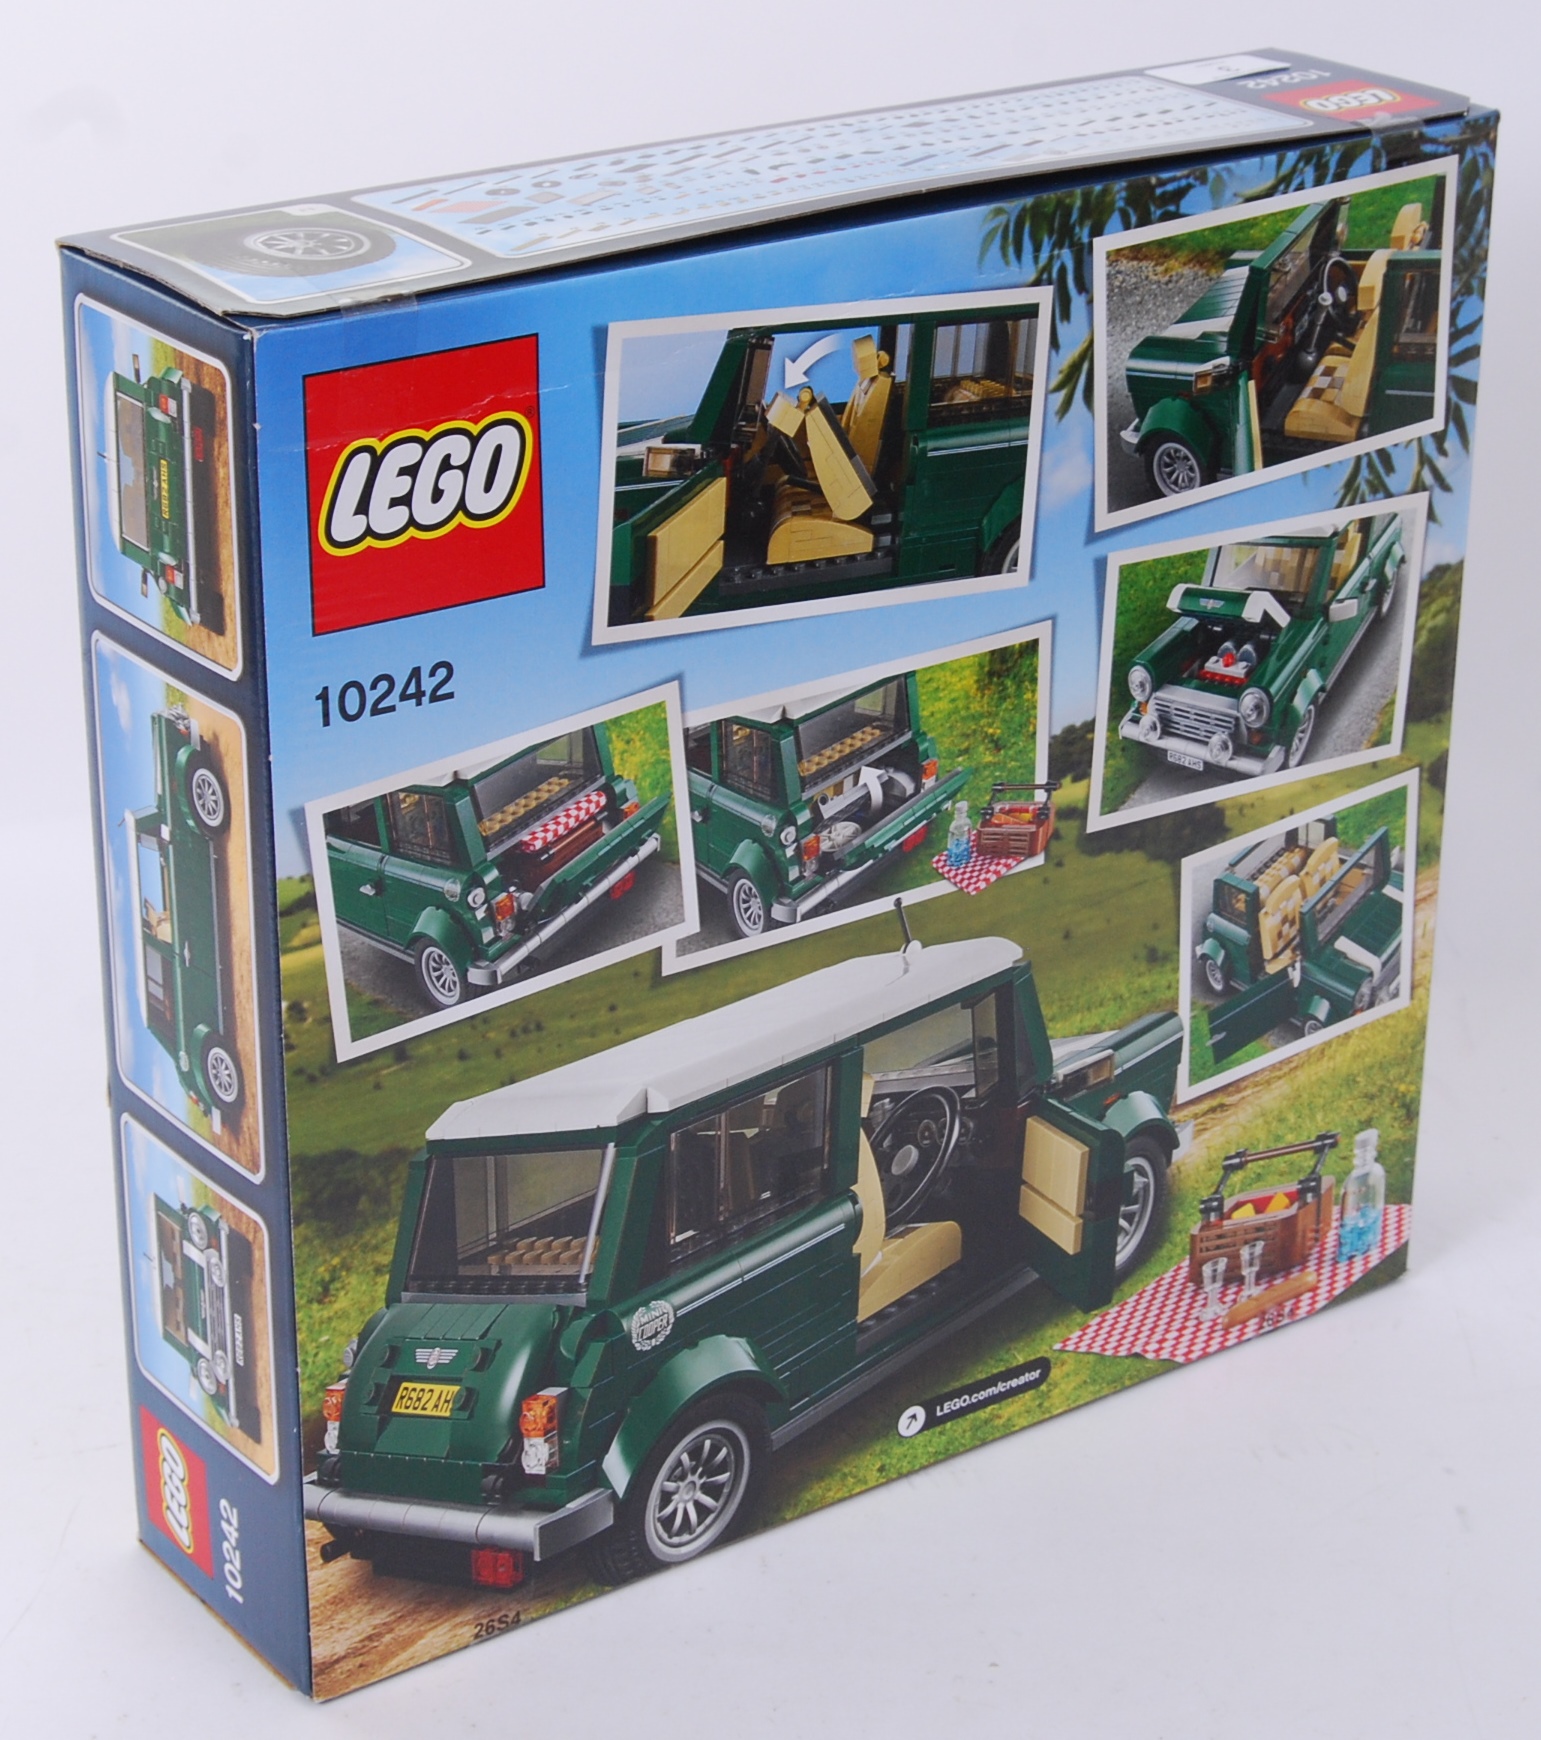 LEGO CREATOR: Lego Creator boxed set 10242 ' Mini Cooper '. Factory sealed, unopened. As new. - Image 2 of 2